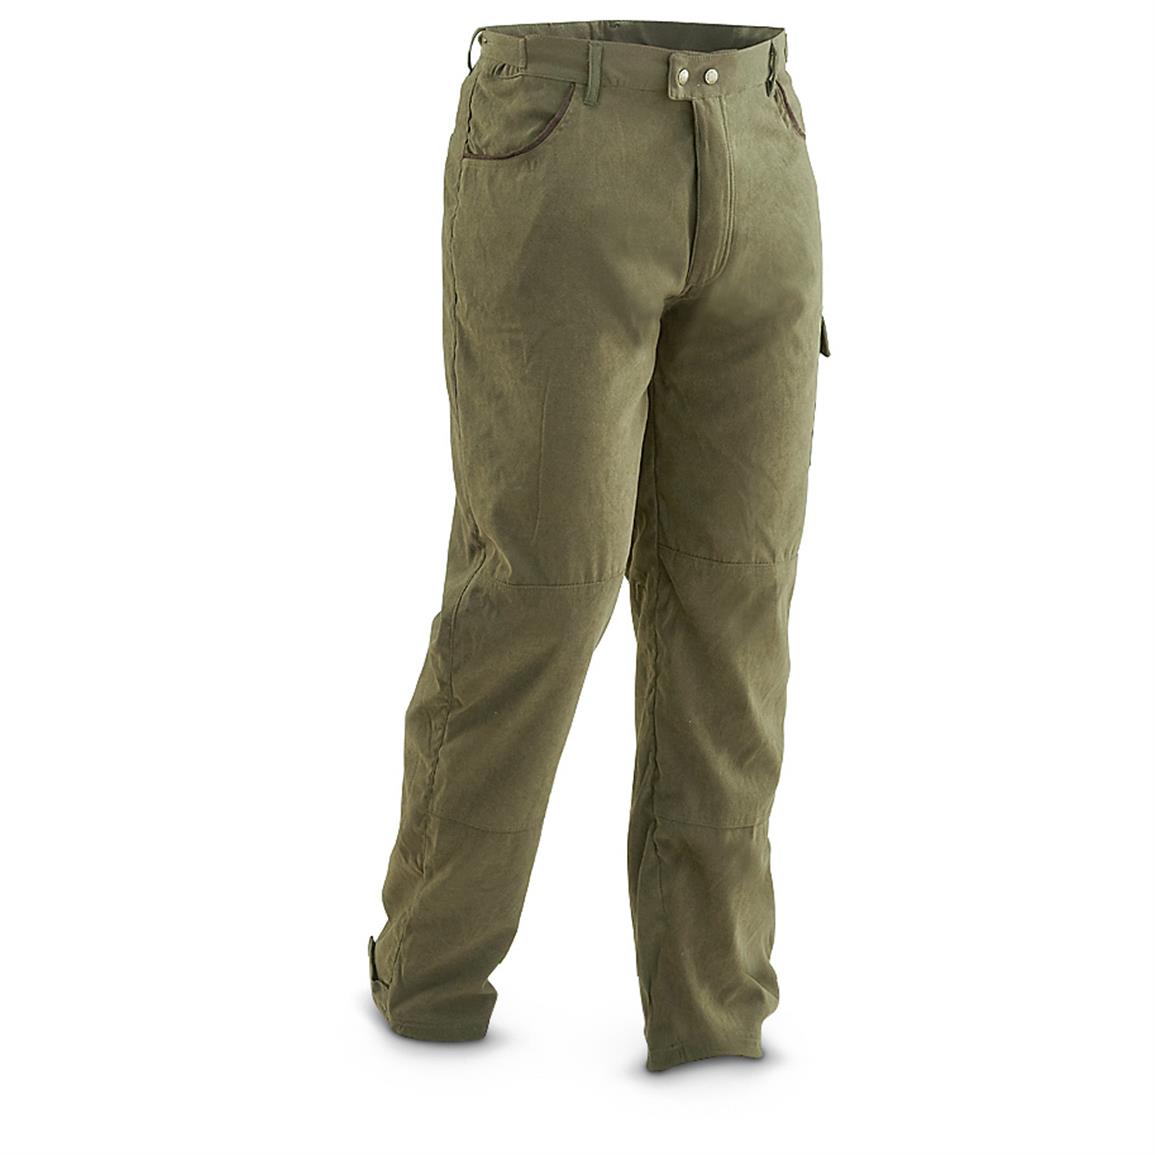 Huntex Waterproof, Windproof Hunting Pants - 621673, Tactical Clothing ...